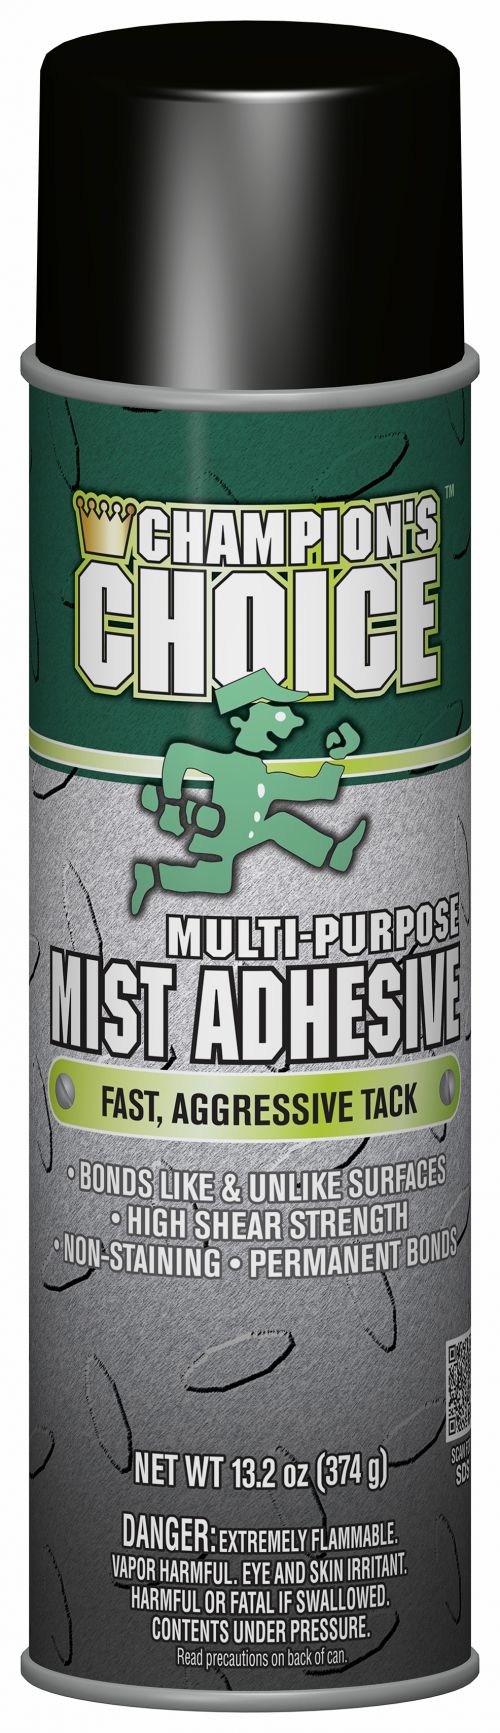 Chase Champion Choice Adhesive Mist Multi Purpose 13.2 oz Pack 12 / Case